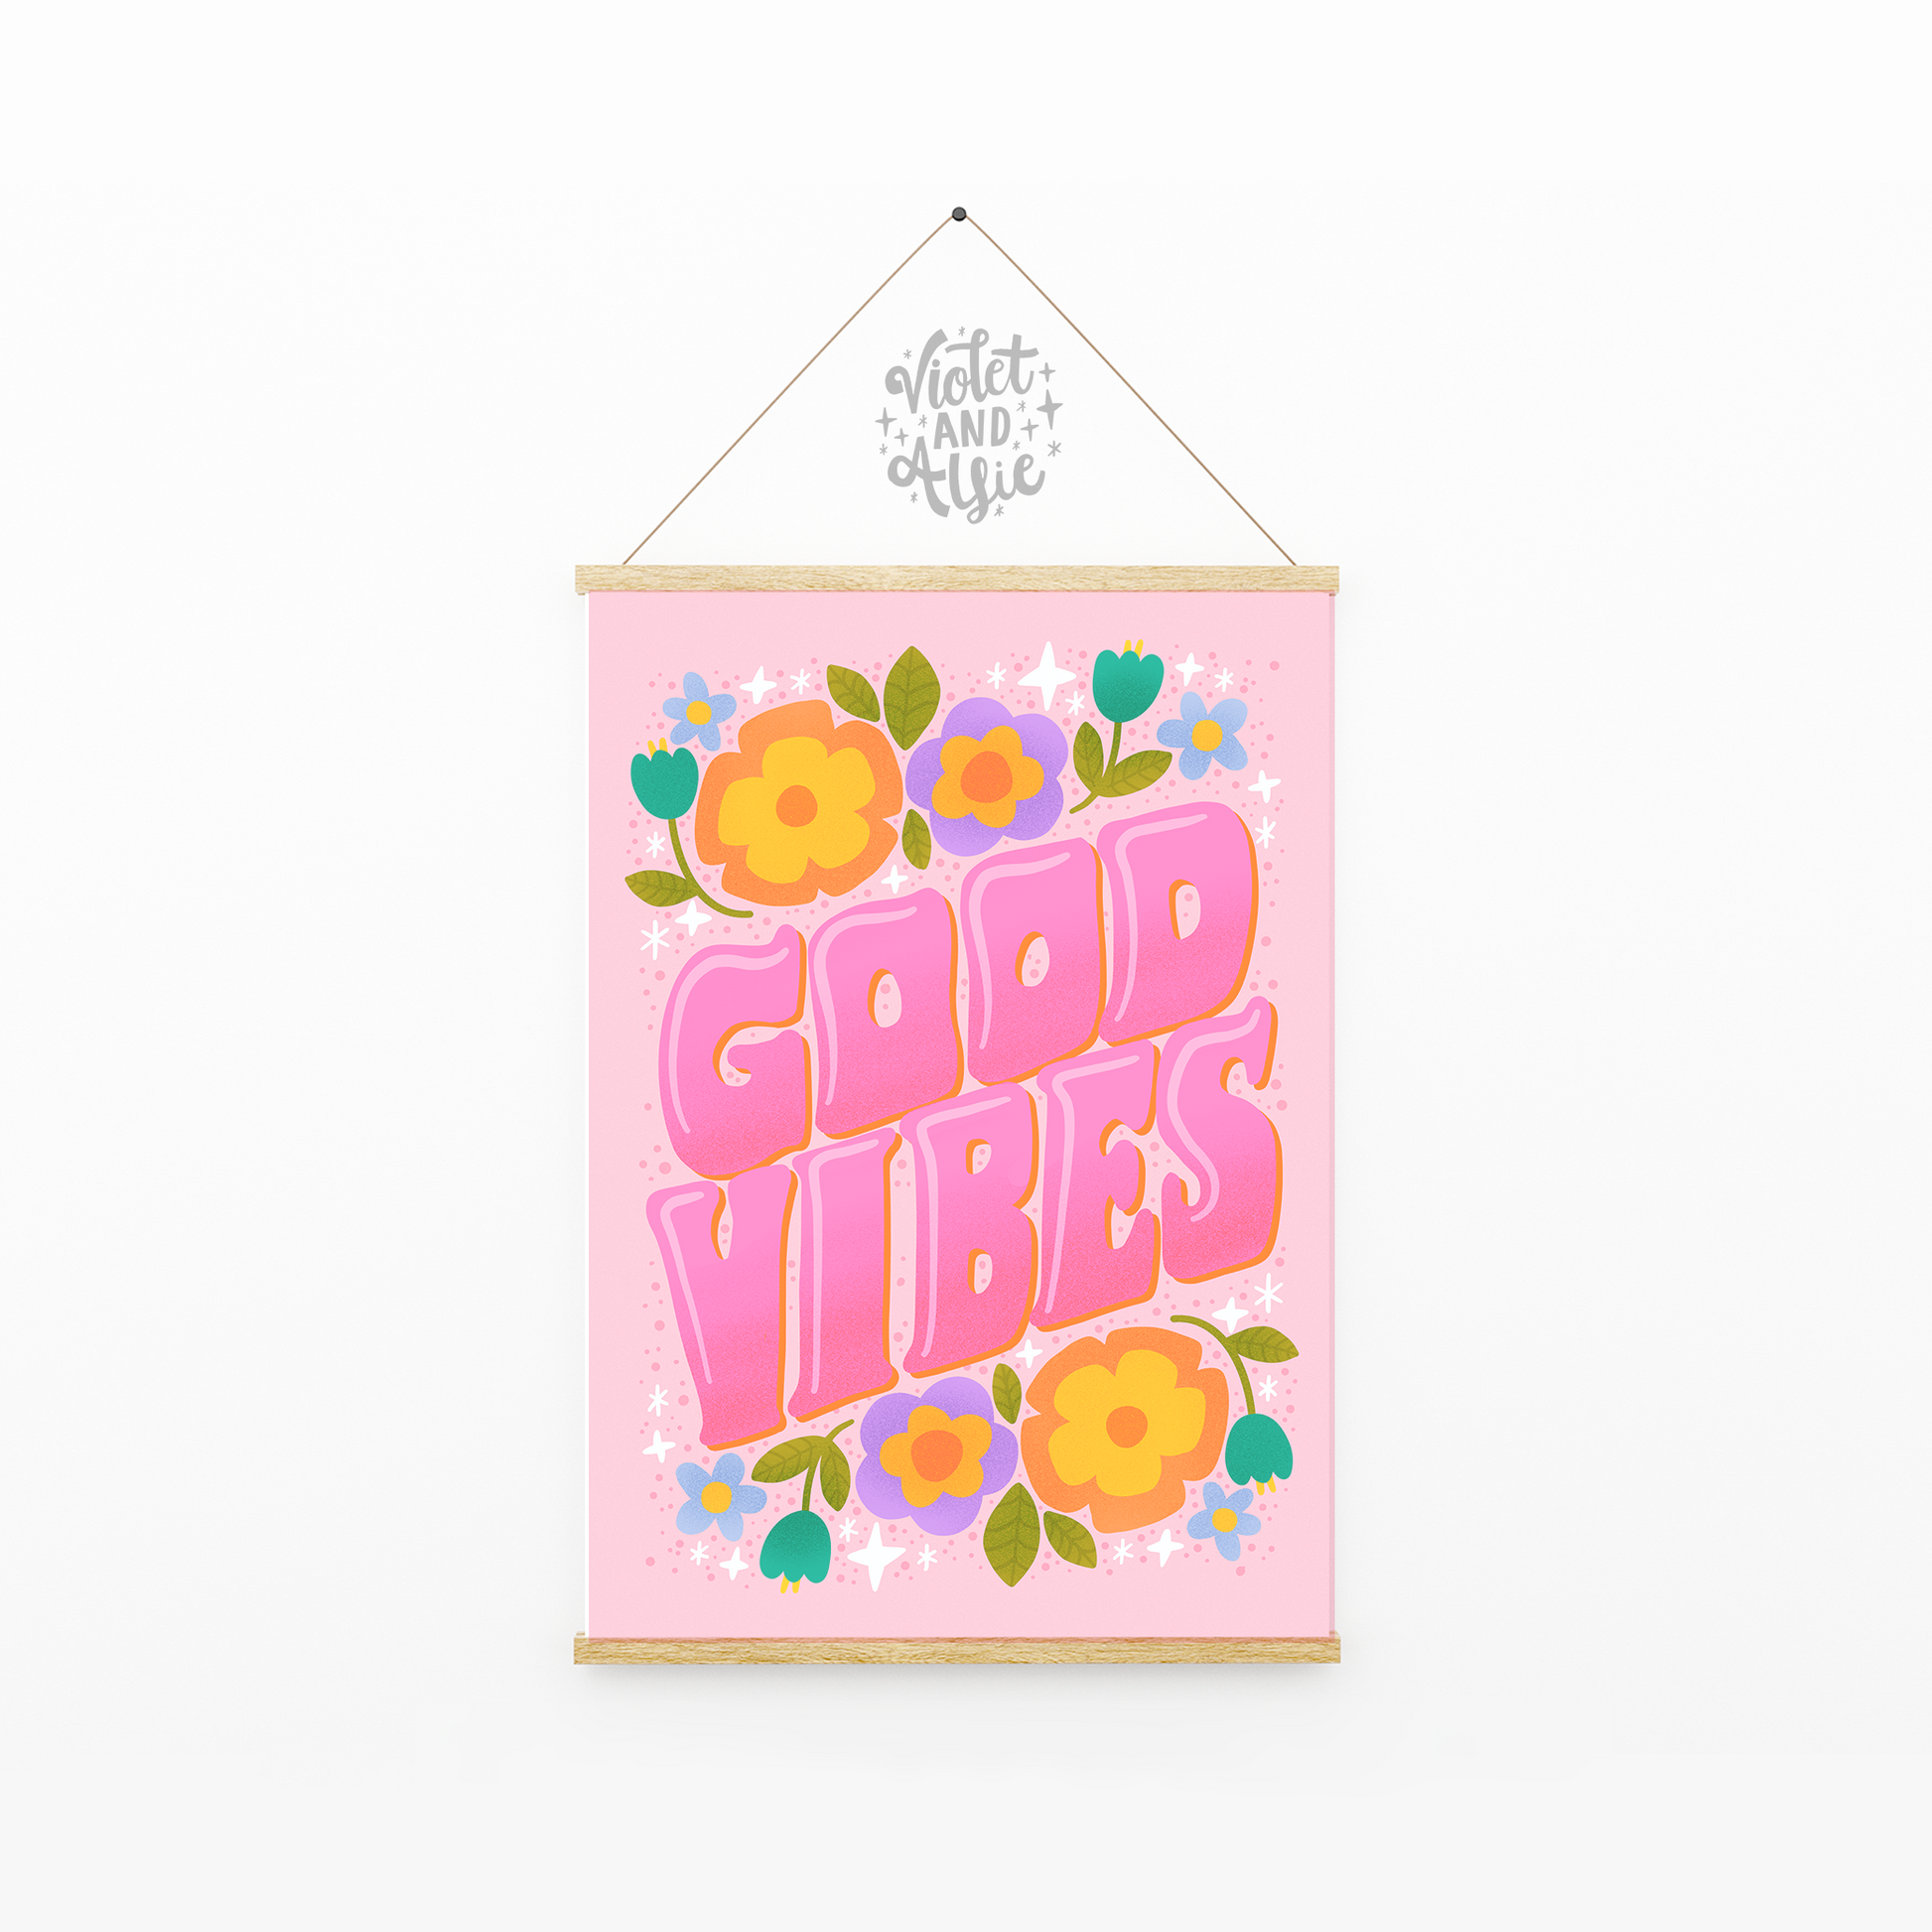 Retro Good Vibes Print | Seventies Wall Art | Boho Eclectic Decor | Kitsch Aesthetic | Pink wall art, hippy decor, eclectic boho art